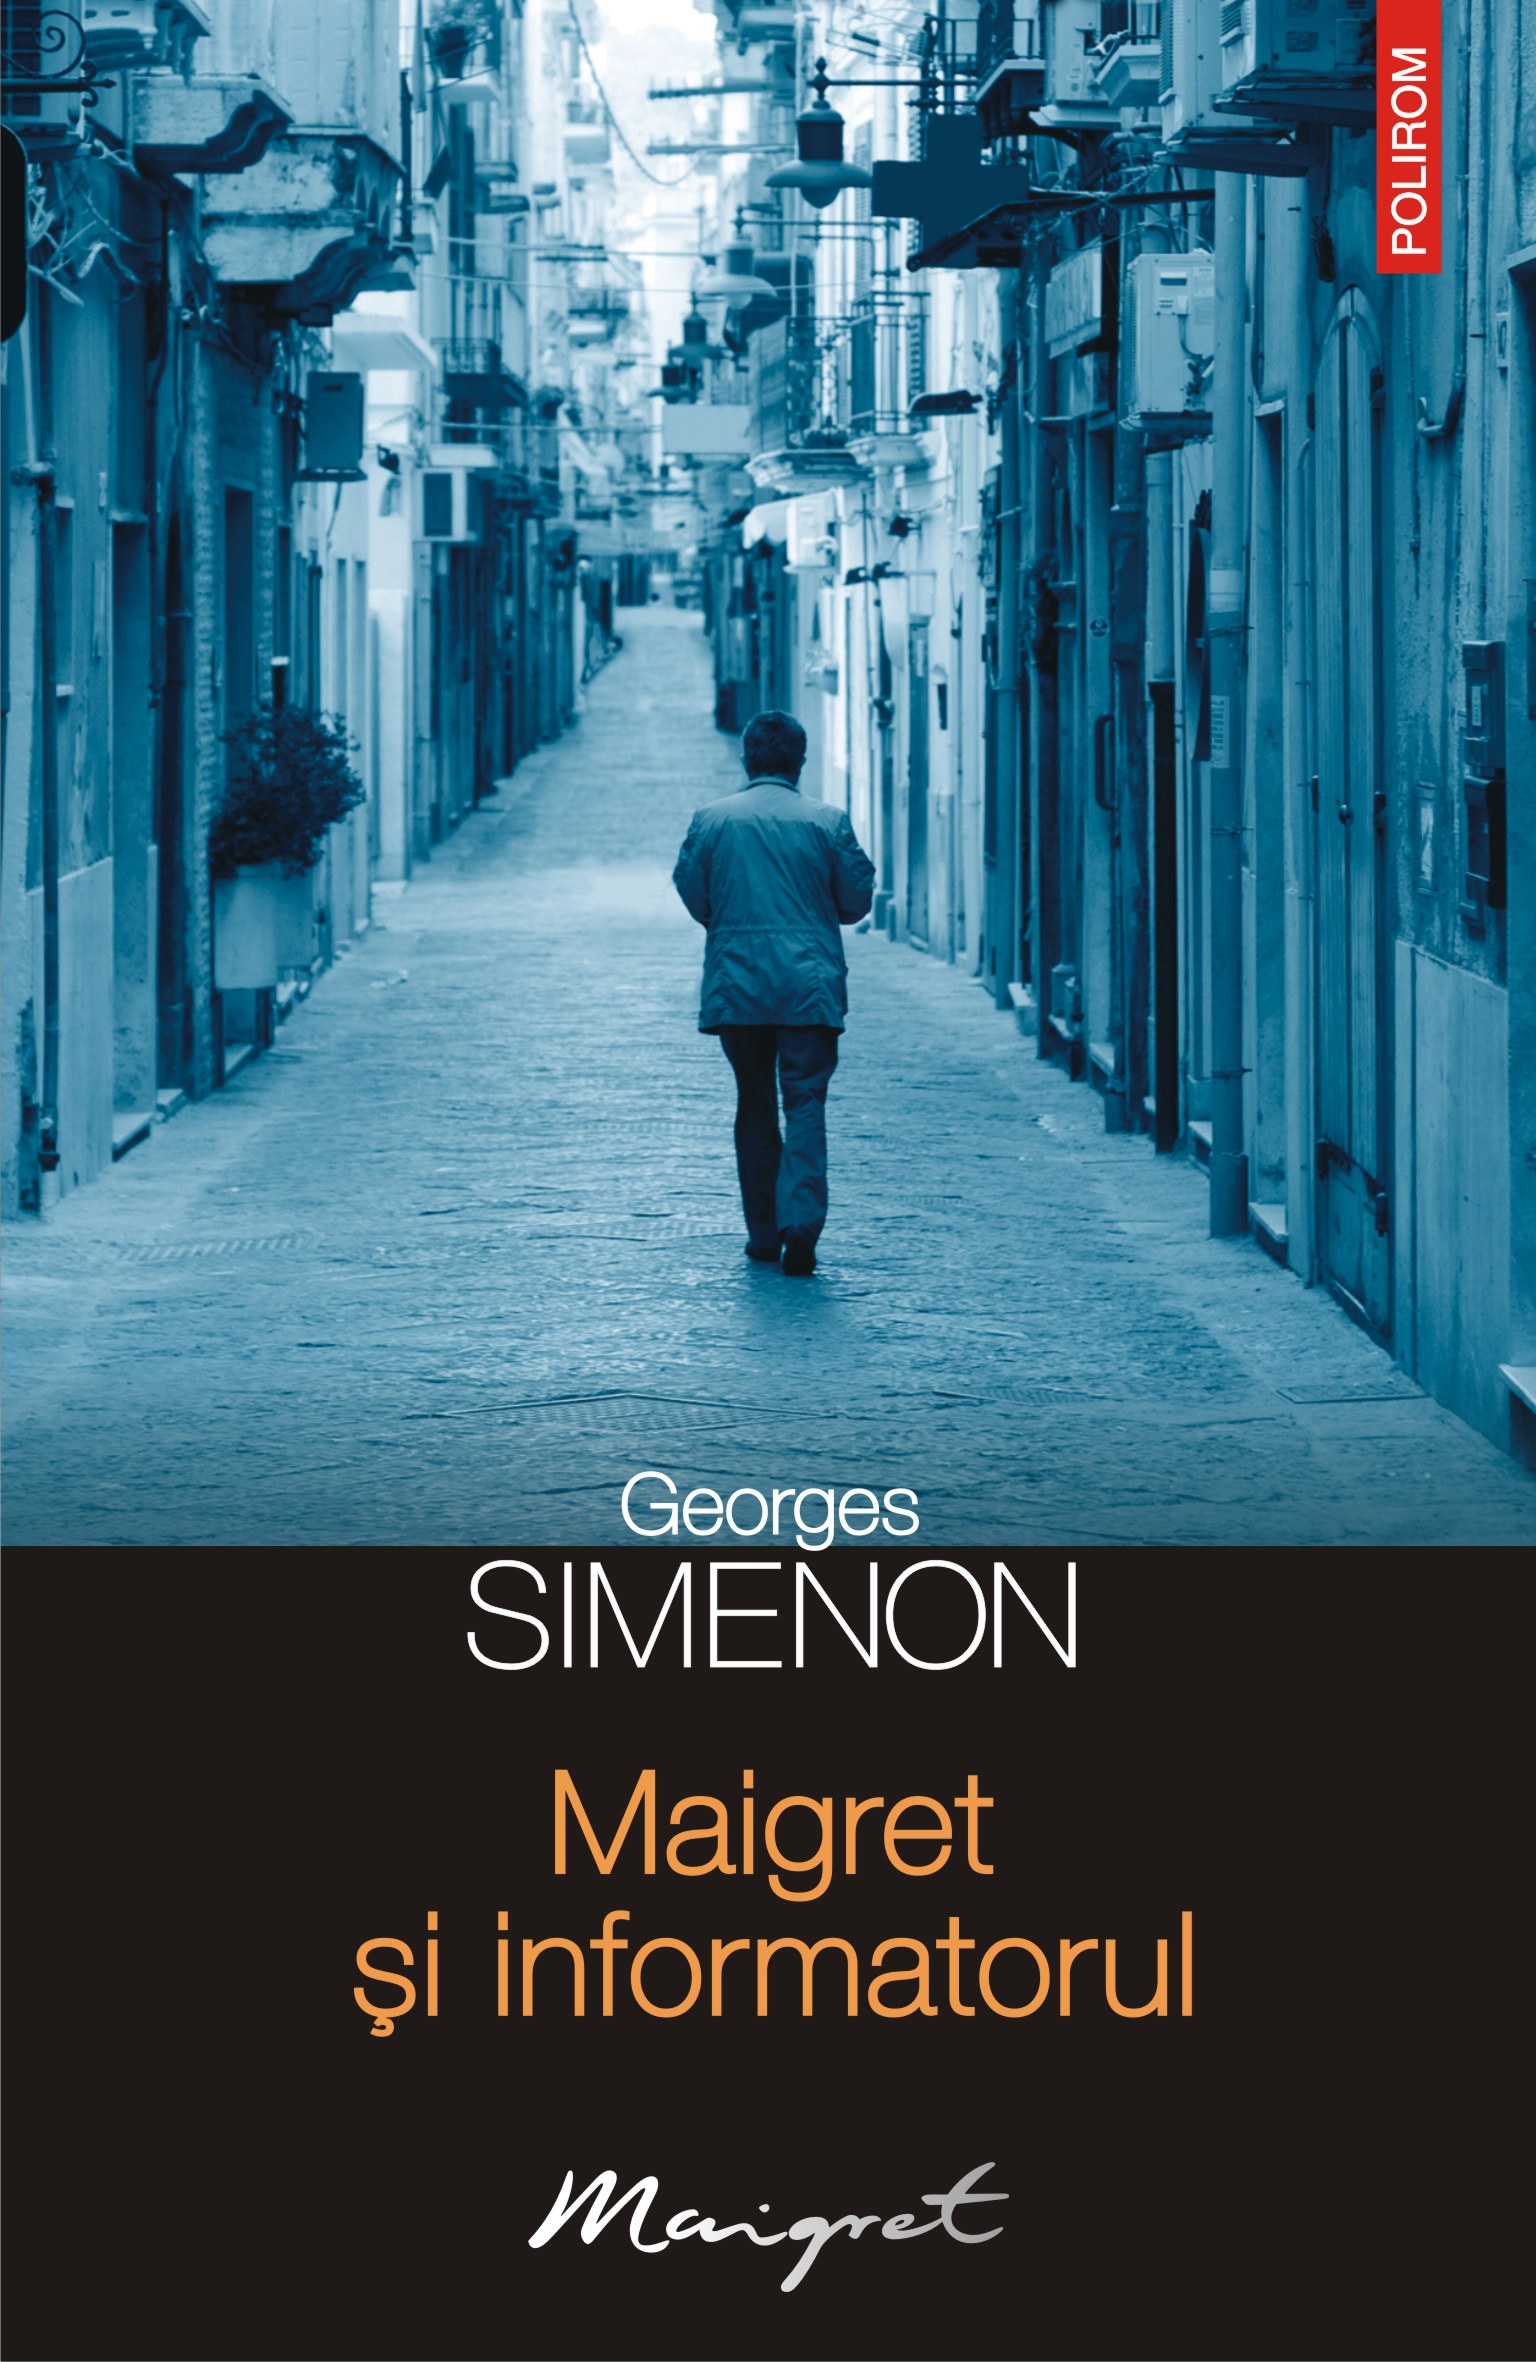 eBook Maigret si informatorul - Georges Simenon